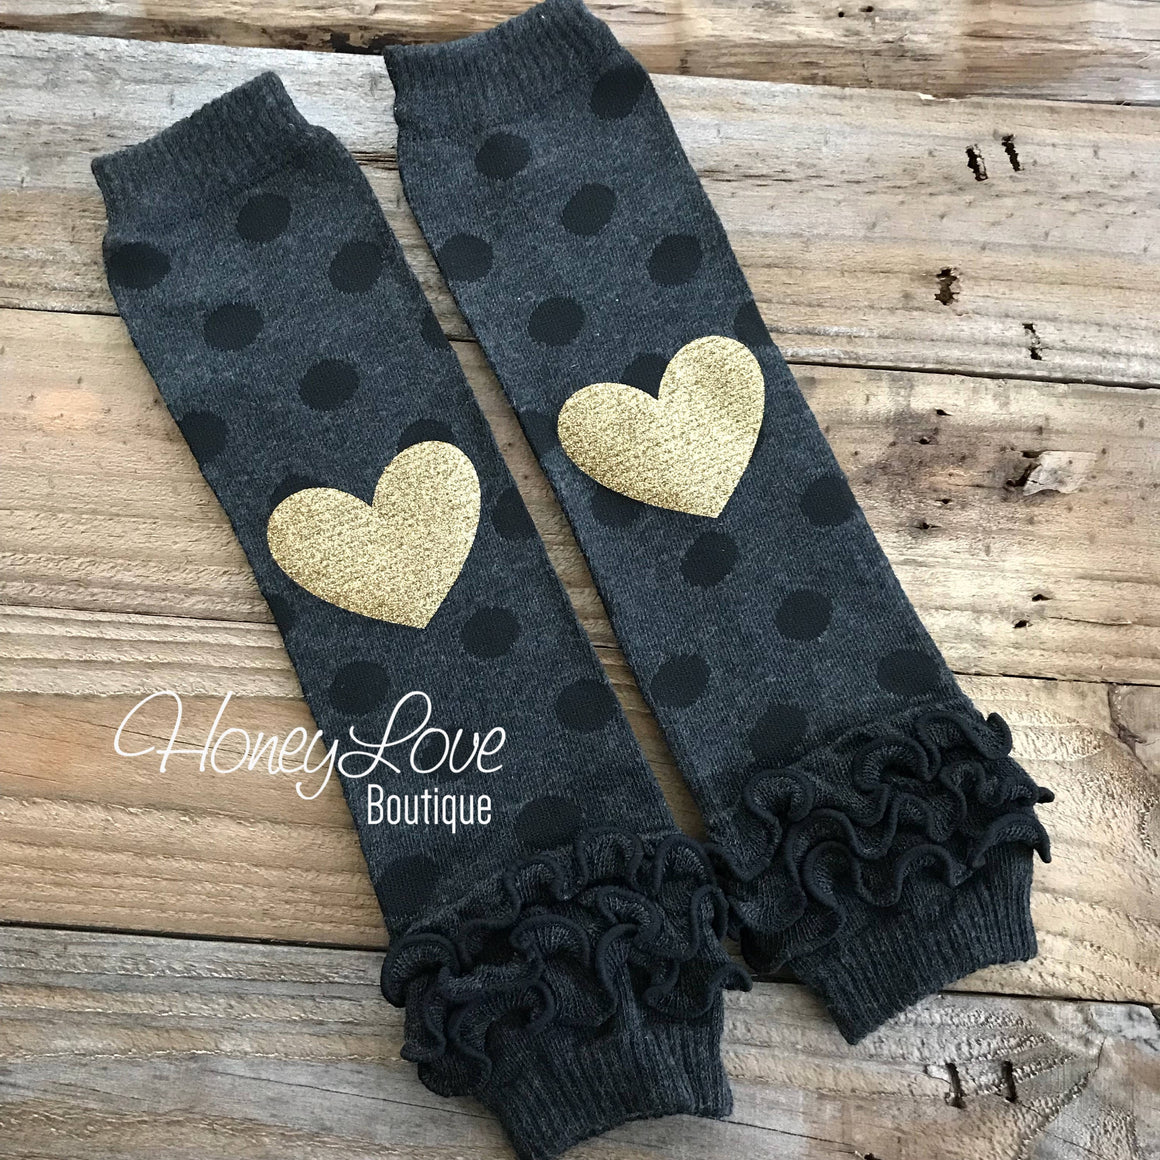 Gray/Black Polka Dot Leg Warmers with Gold Glitter Heart and matching headband - HoneyLoveBoutique